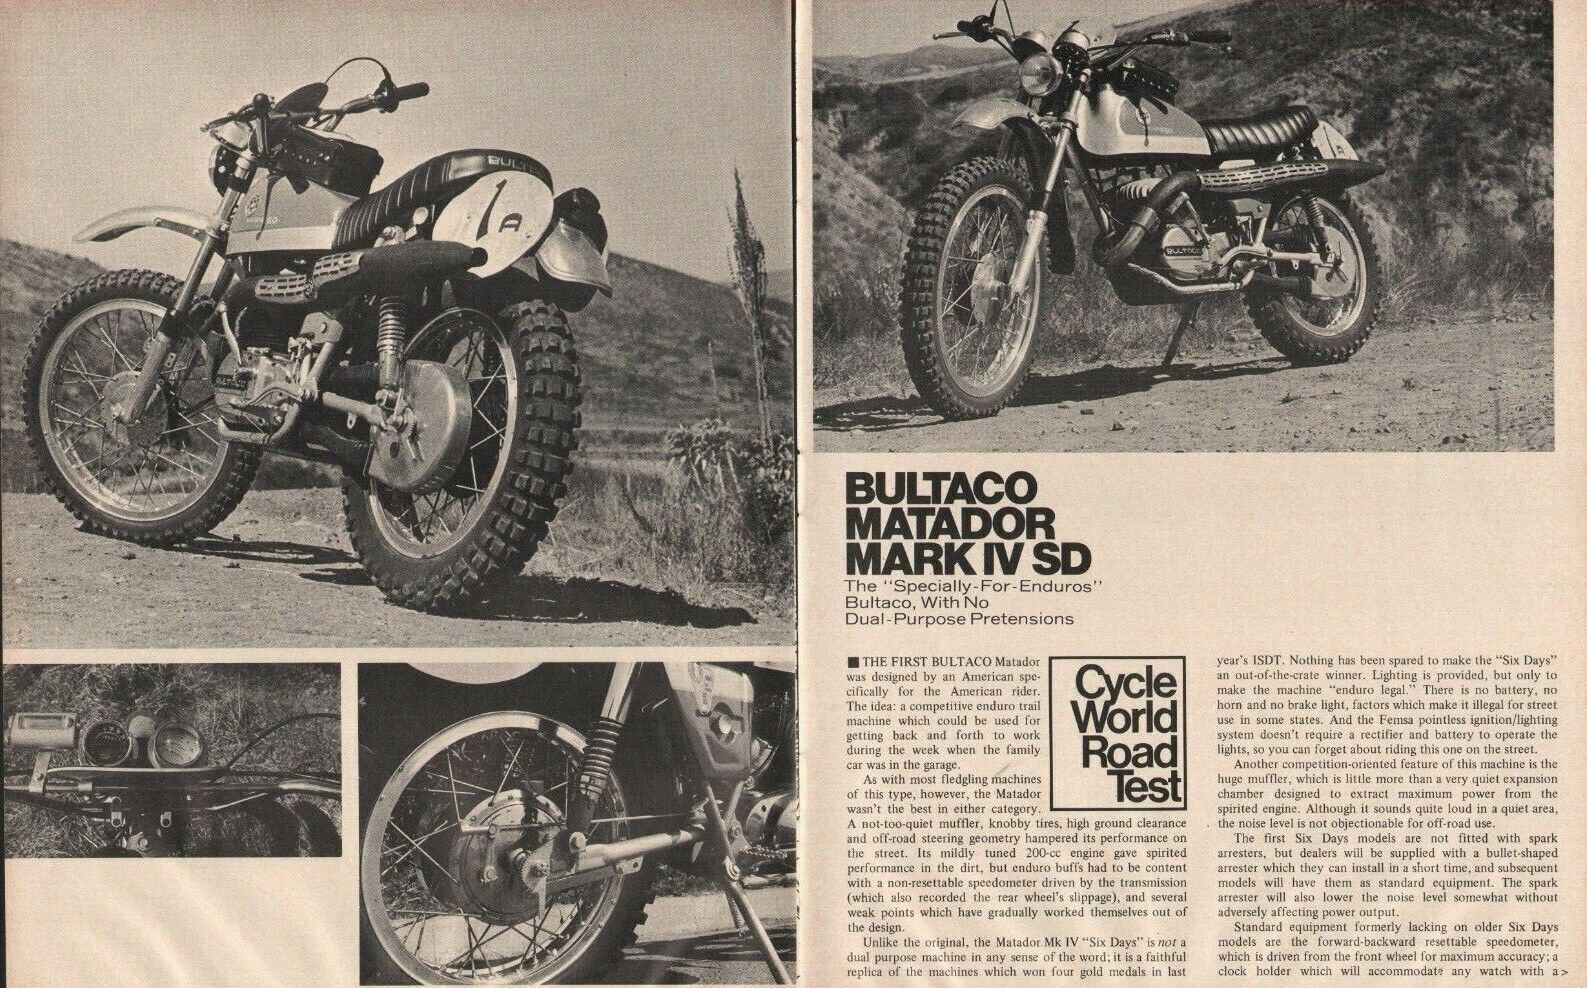 1972 Bultaco Matador Mark IV SD - 5-Page Vintage Motorcycle Road Test Article